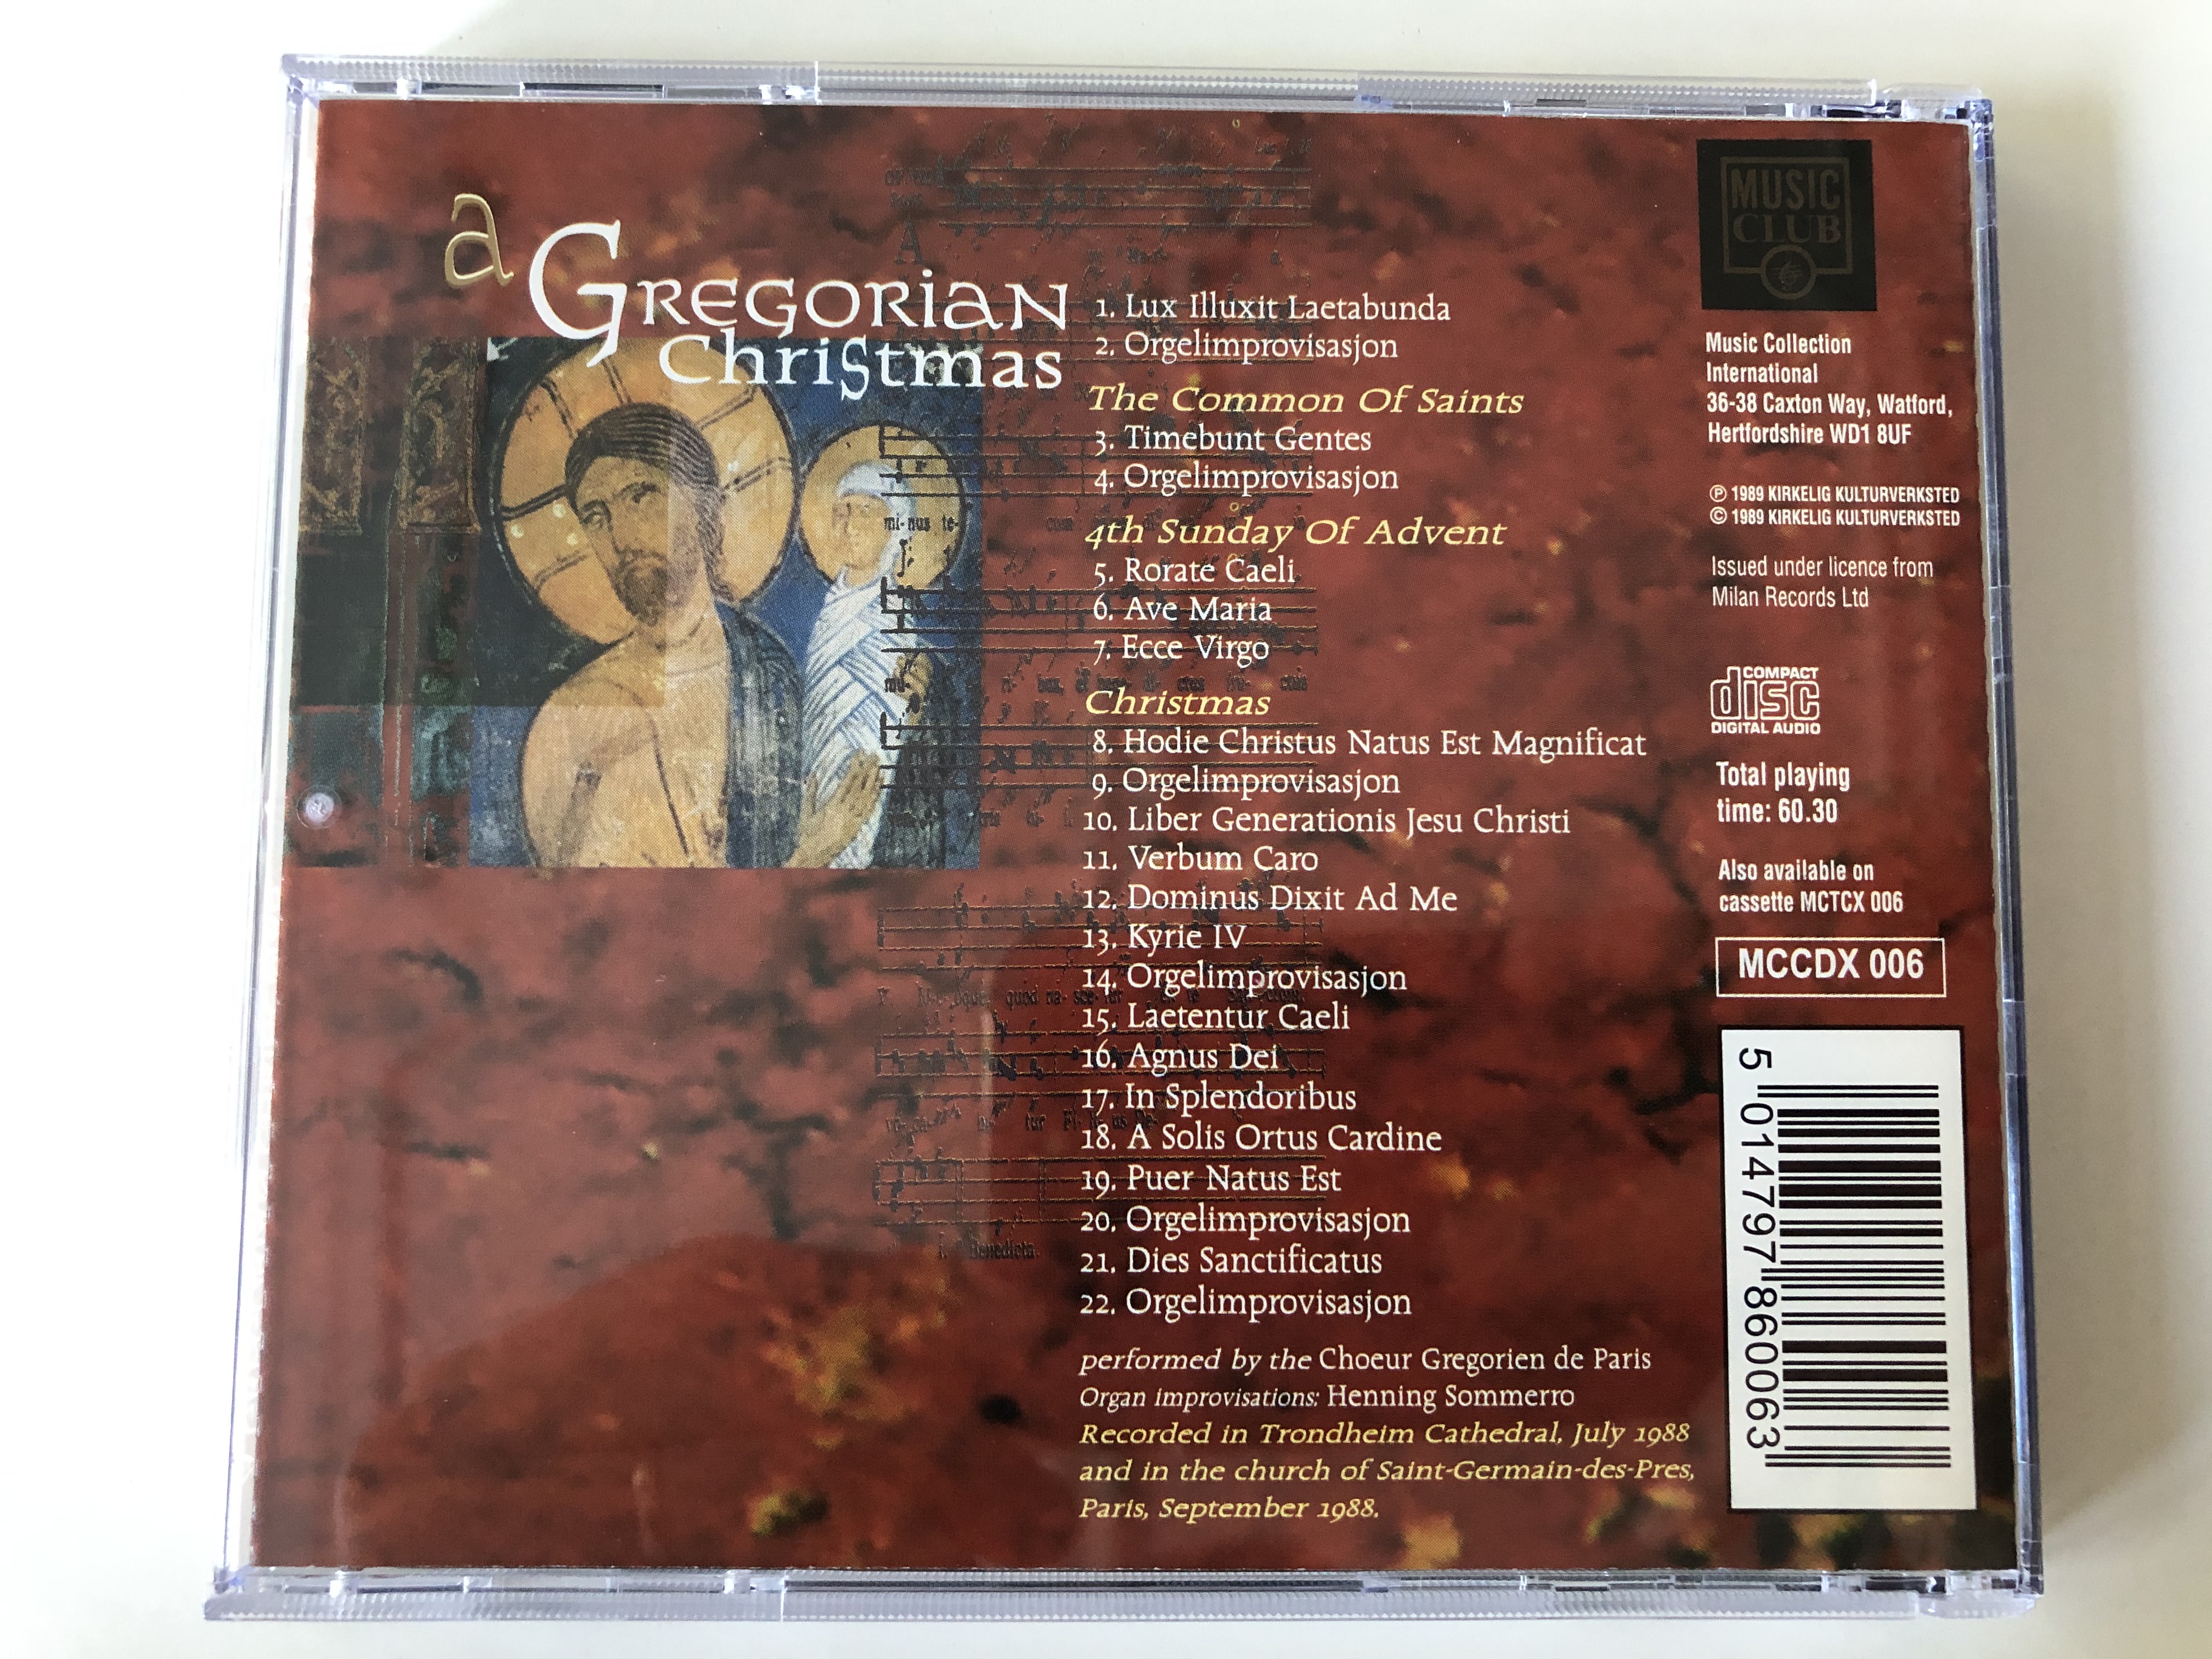 a-gregorian-christmas-a-collection-of-seasonal-gregorian-chants-performed-by-the-choeur-gr-gorien-de-paris-organ-improvisations-henning-sommerro-music-club-audio-cd-1989-mccdx-006-5-.jpg